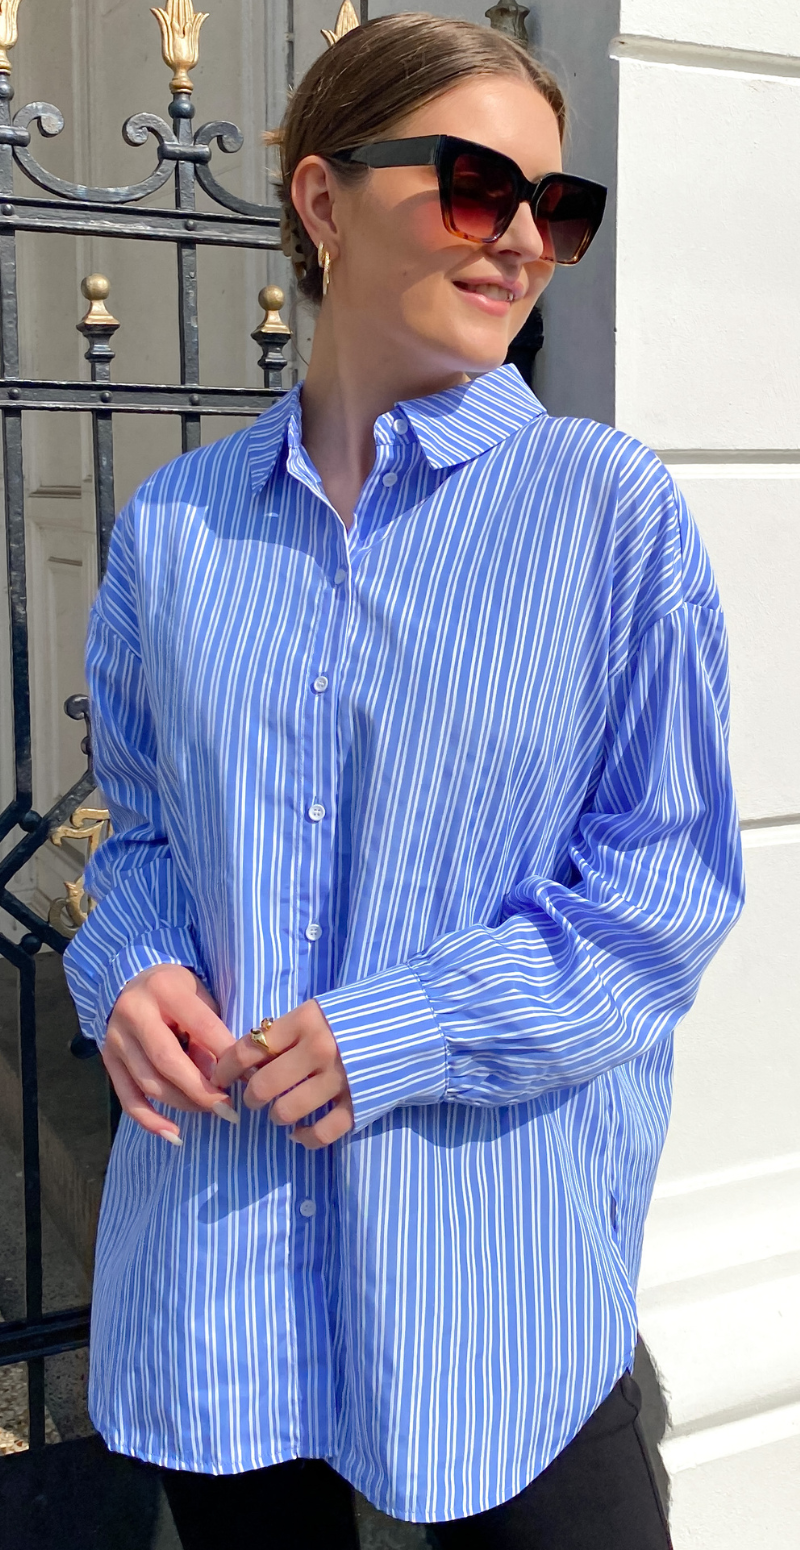 Stribet skjorte med blomsterbroche off-white w. colony blue